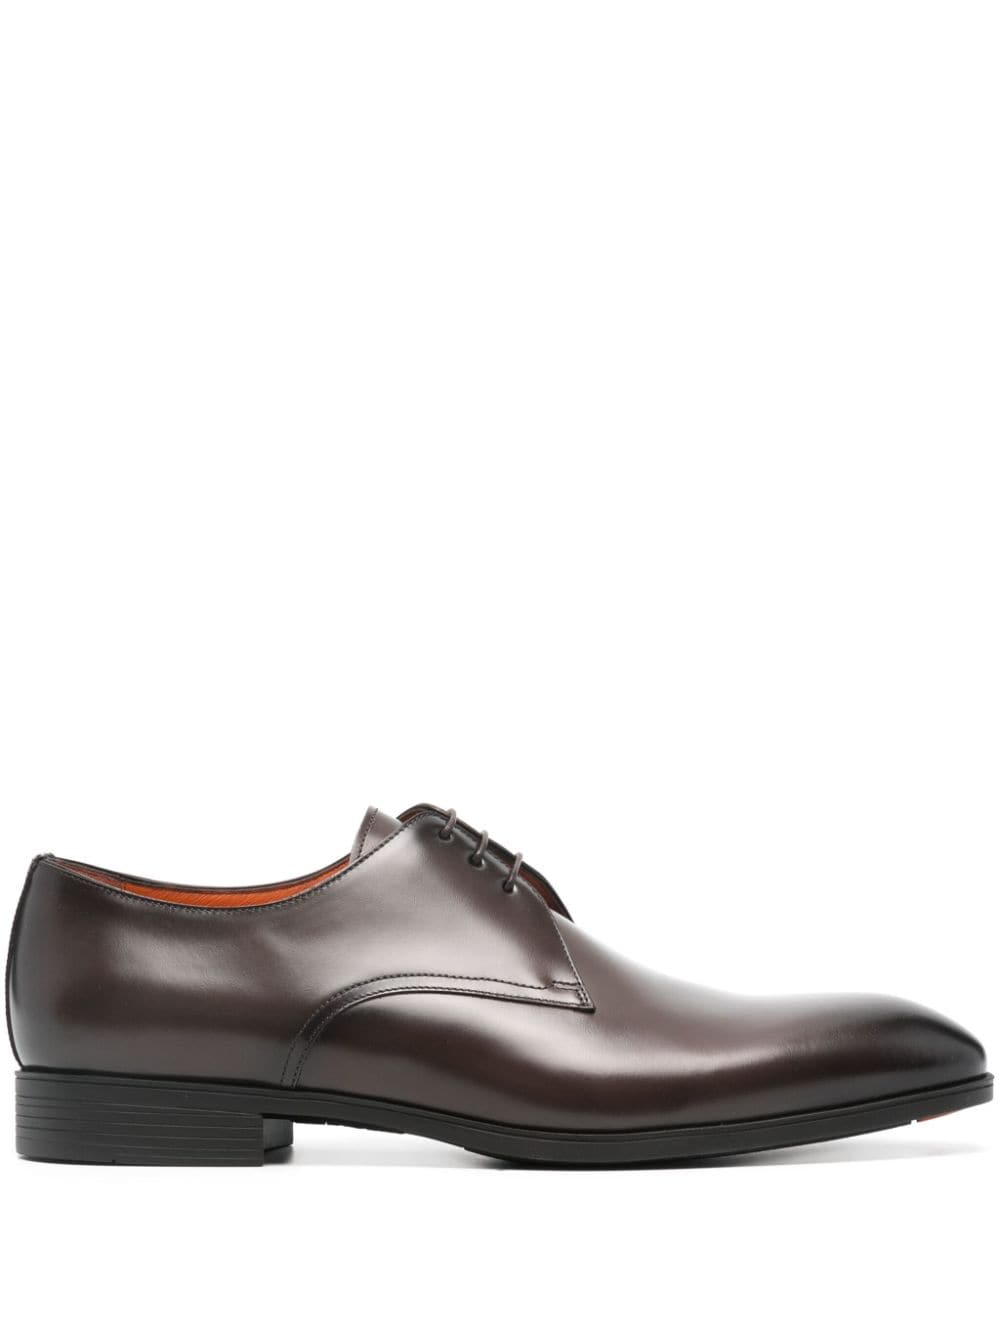 Santoni round-toe leather Oxford shoes - Brown von Santoni